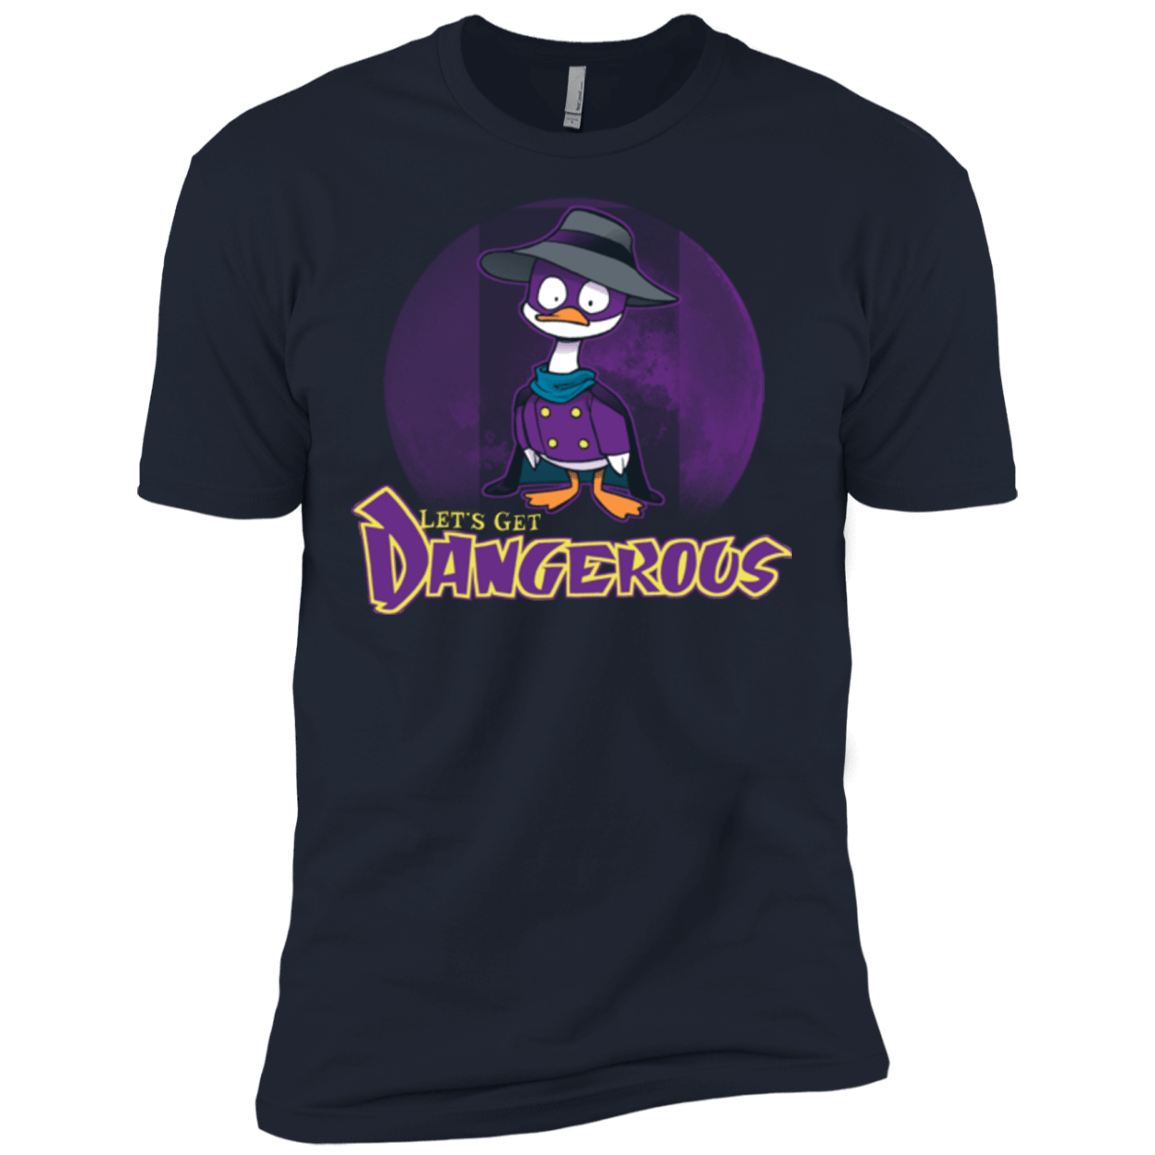 DW Duck Men's Premium T-Shirt